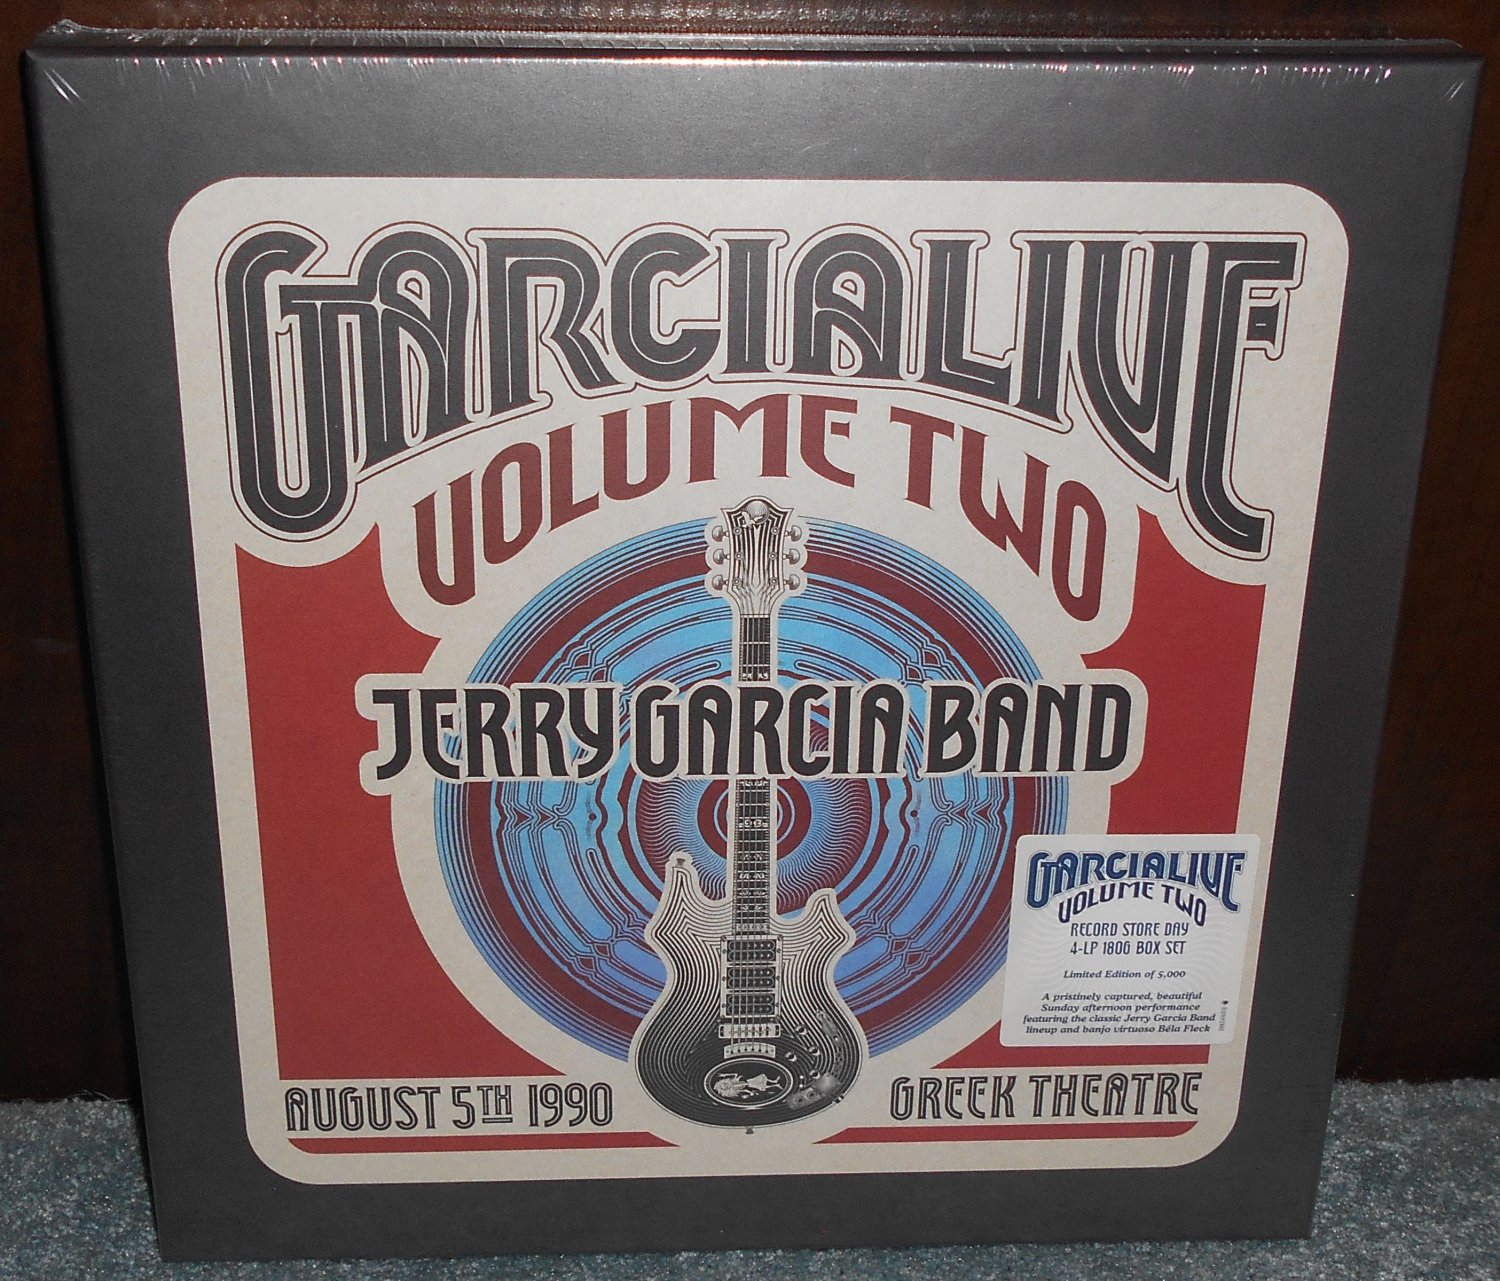 Jerry Garcia Band GarciaLive Volume Two 2 4-LP Vinyl Box Set Grateful Dead Greek